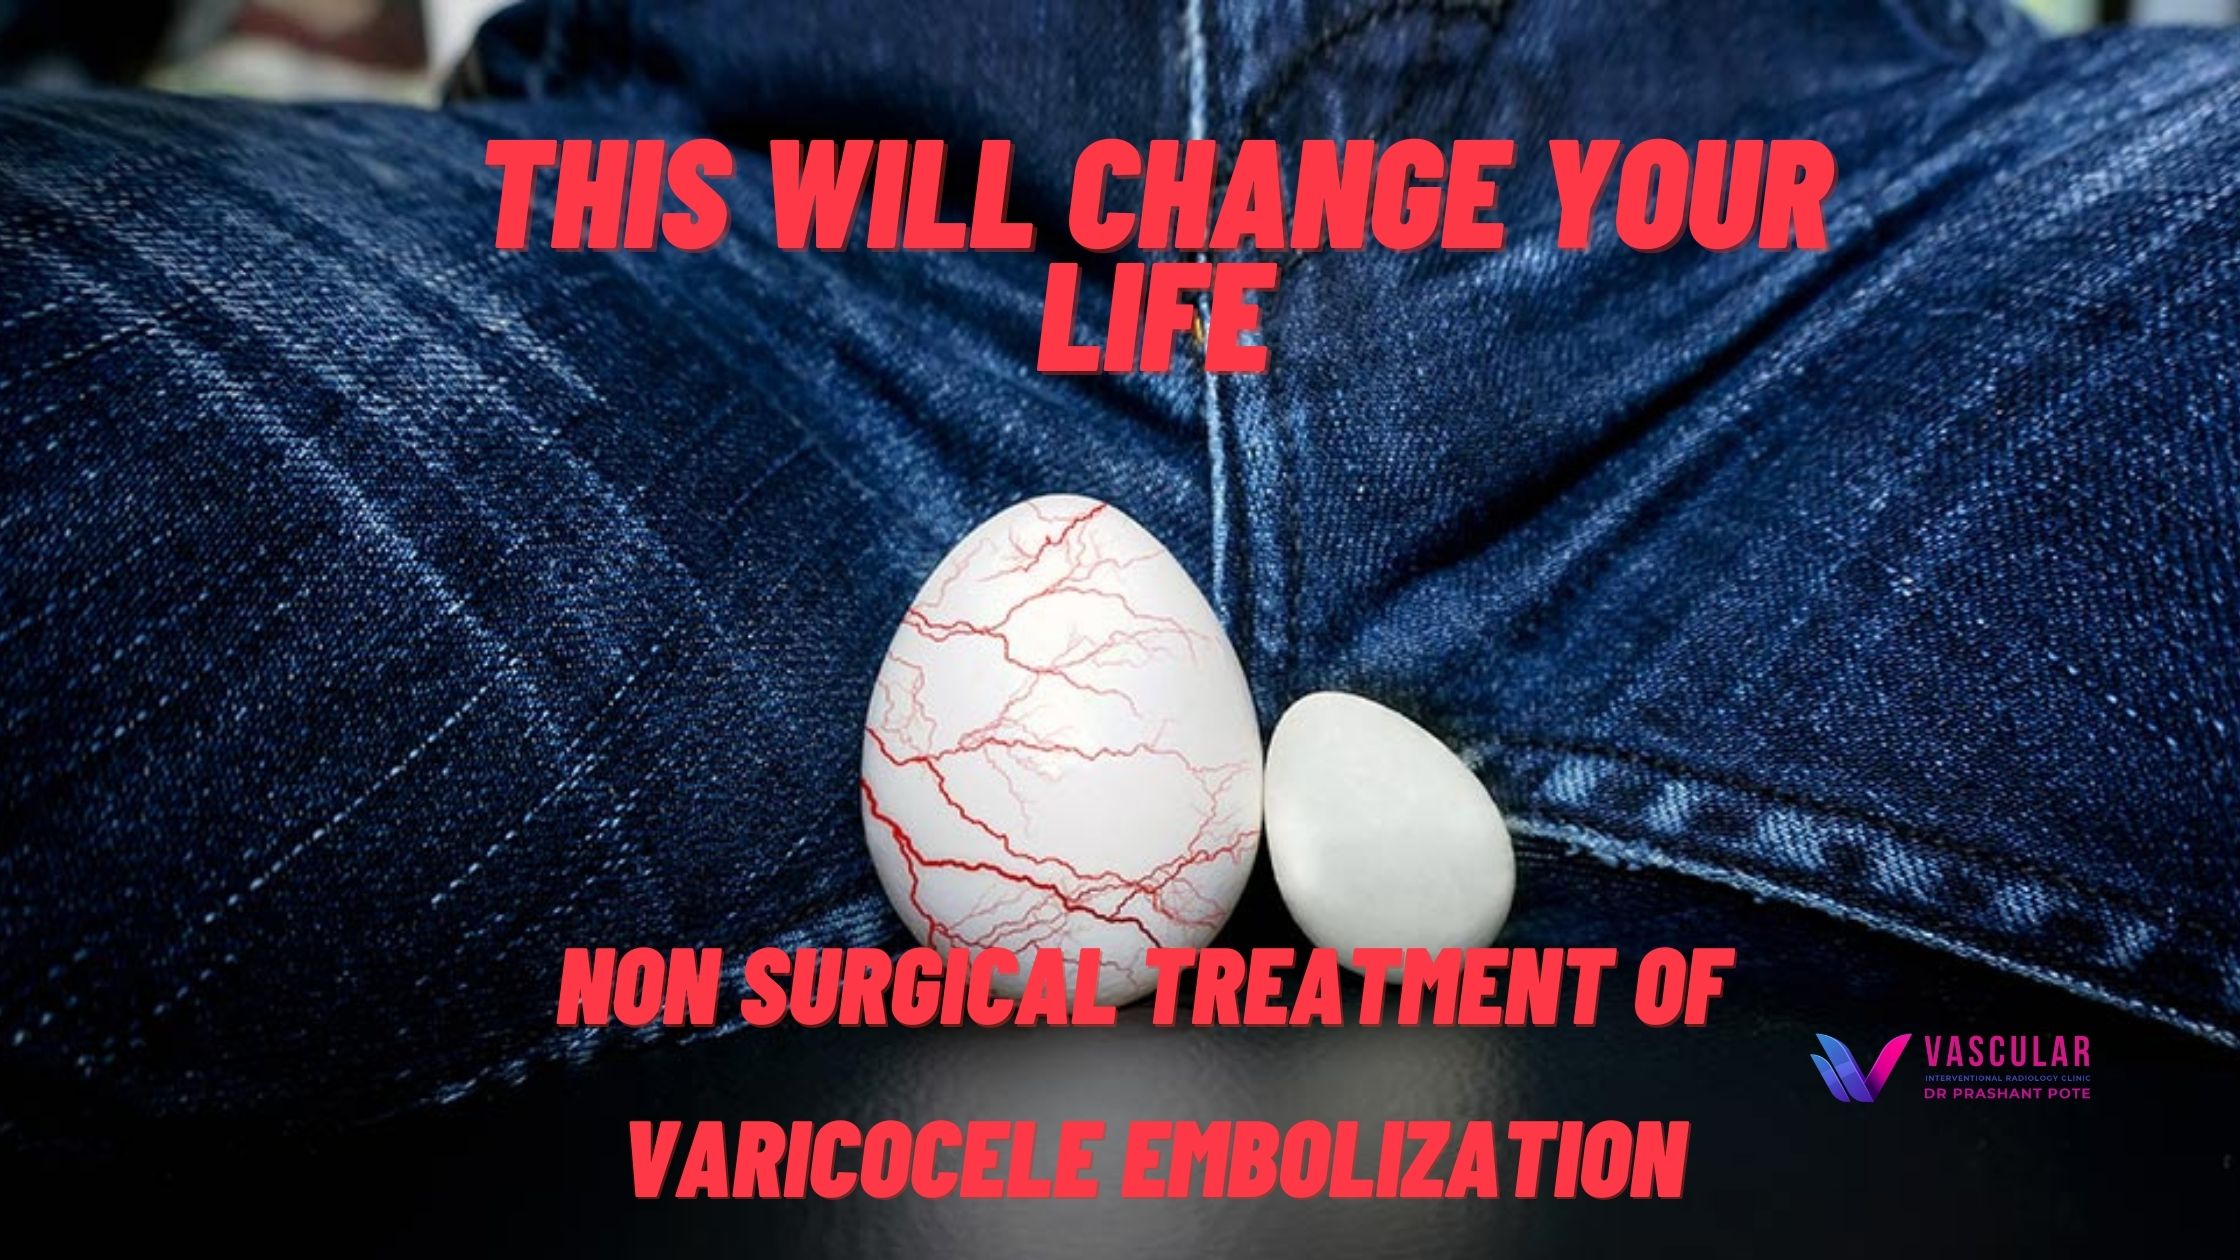 Non-surgical treatment of varicocele embolization – Dr Prashant Pote